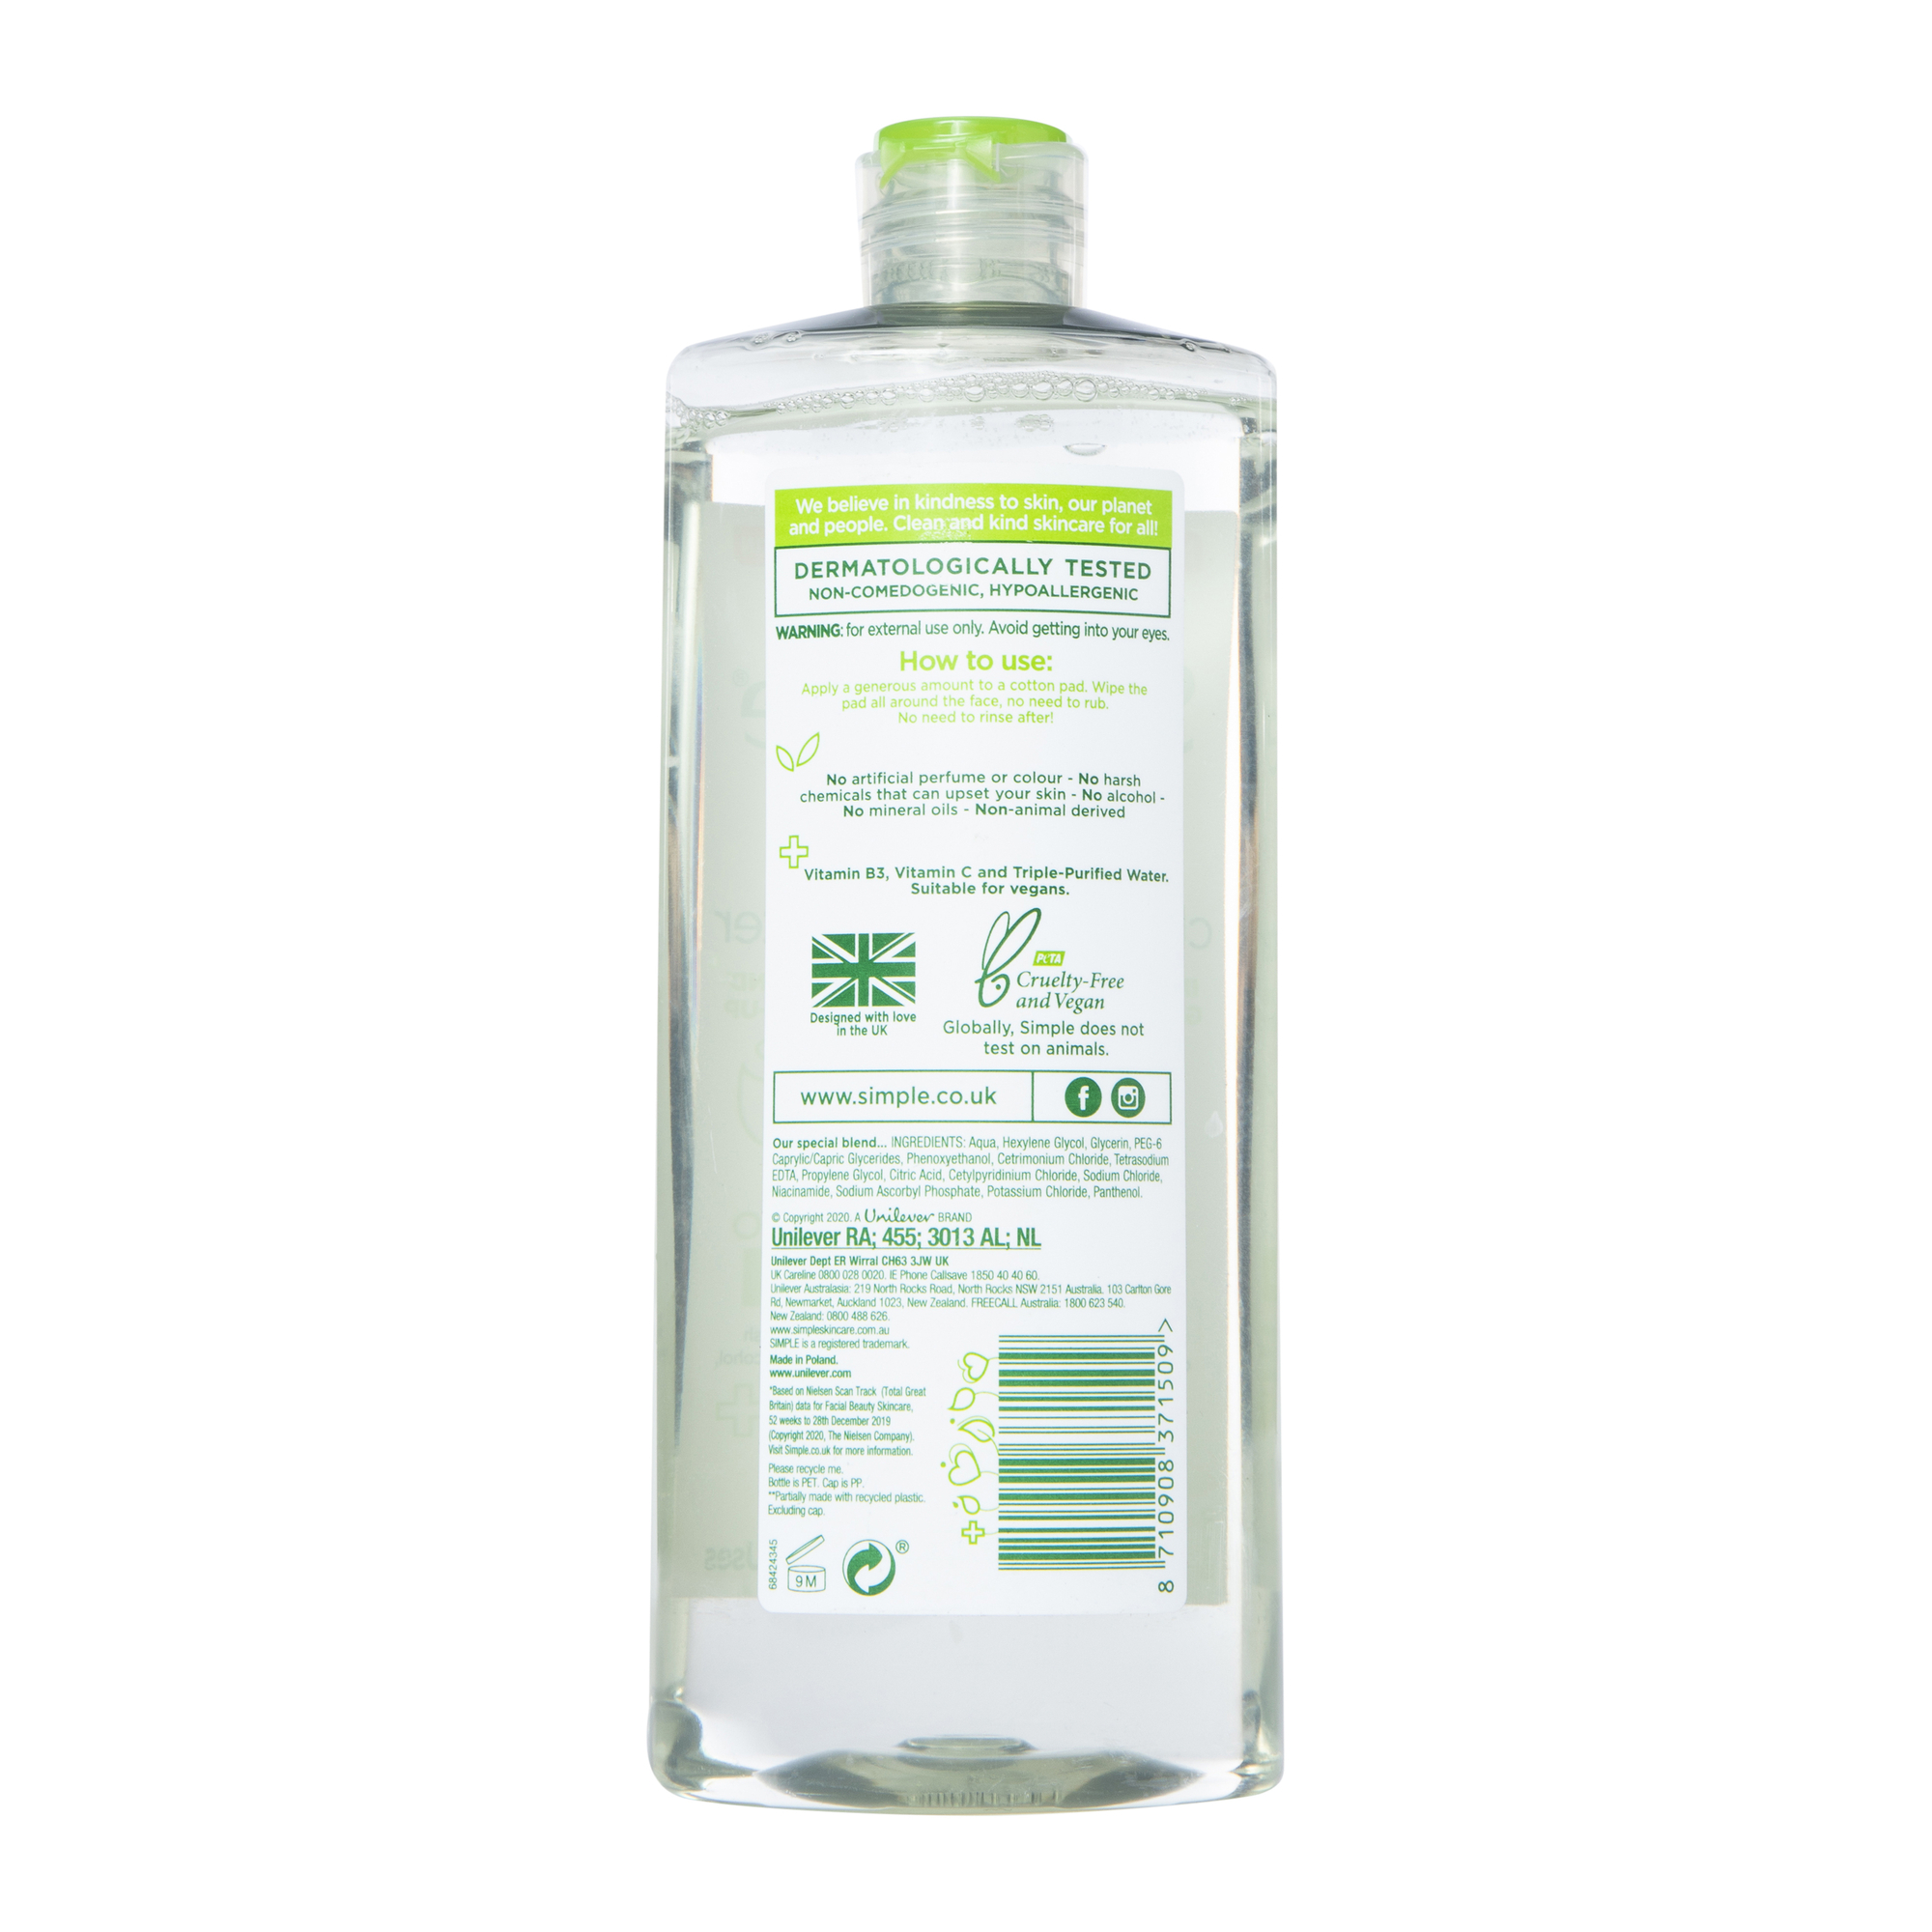 simple® micellar cleansing water 13.5oz